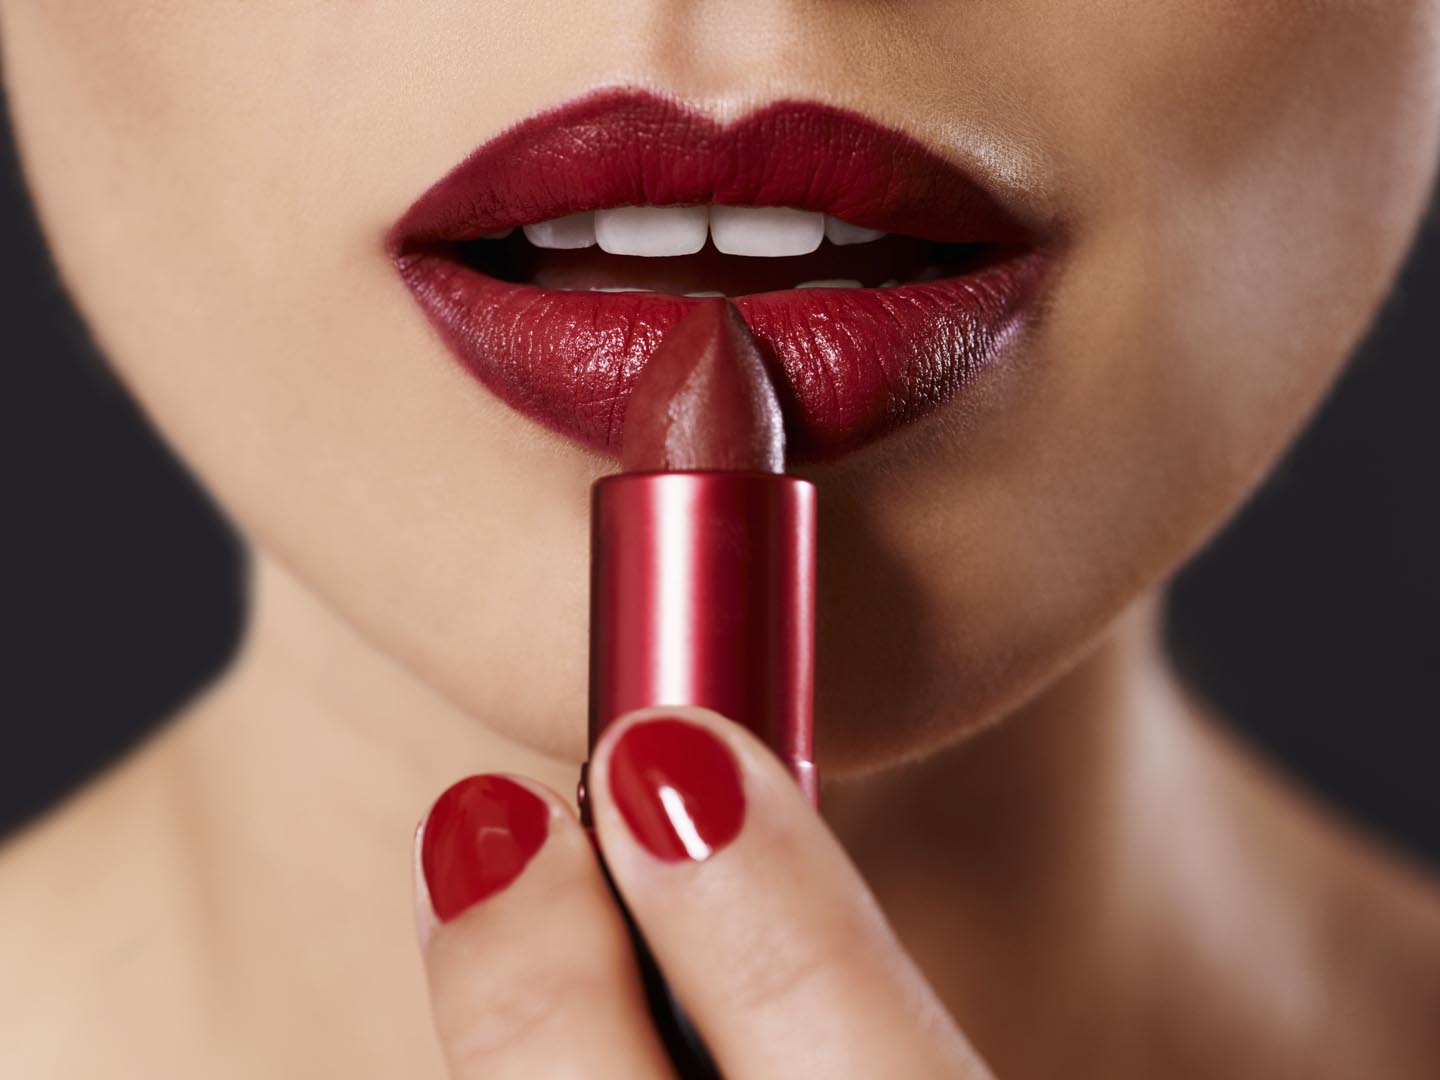 Closeup image of a woman applying lipstick